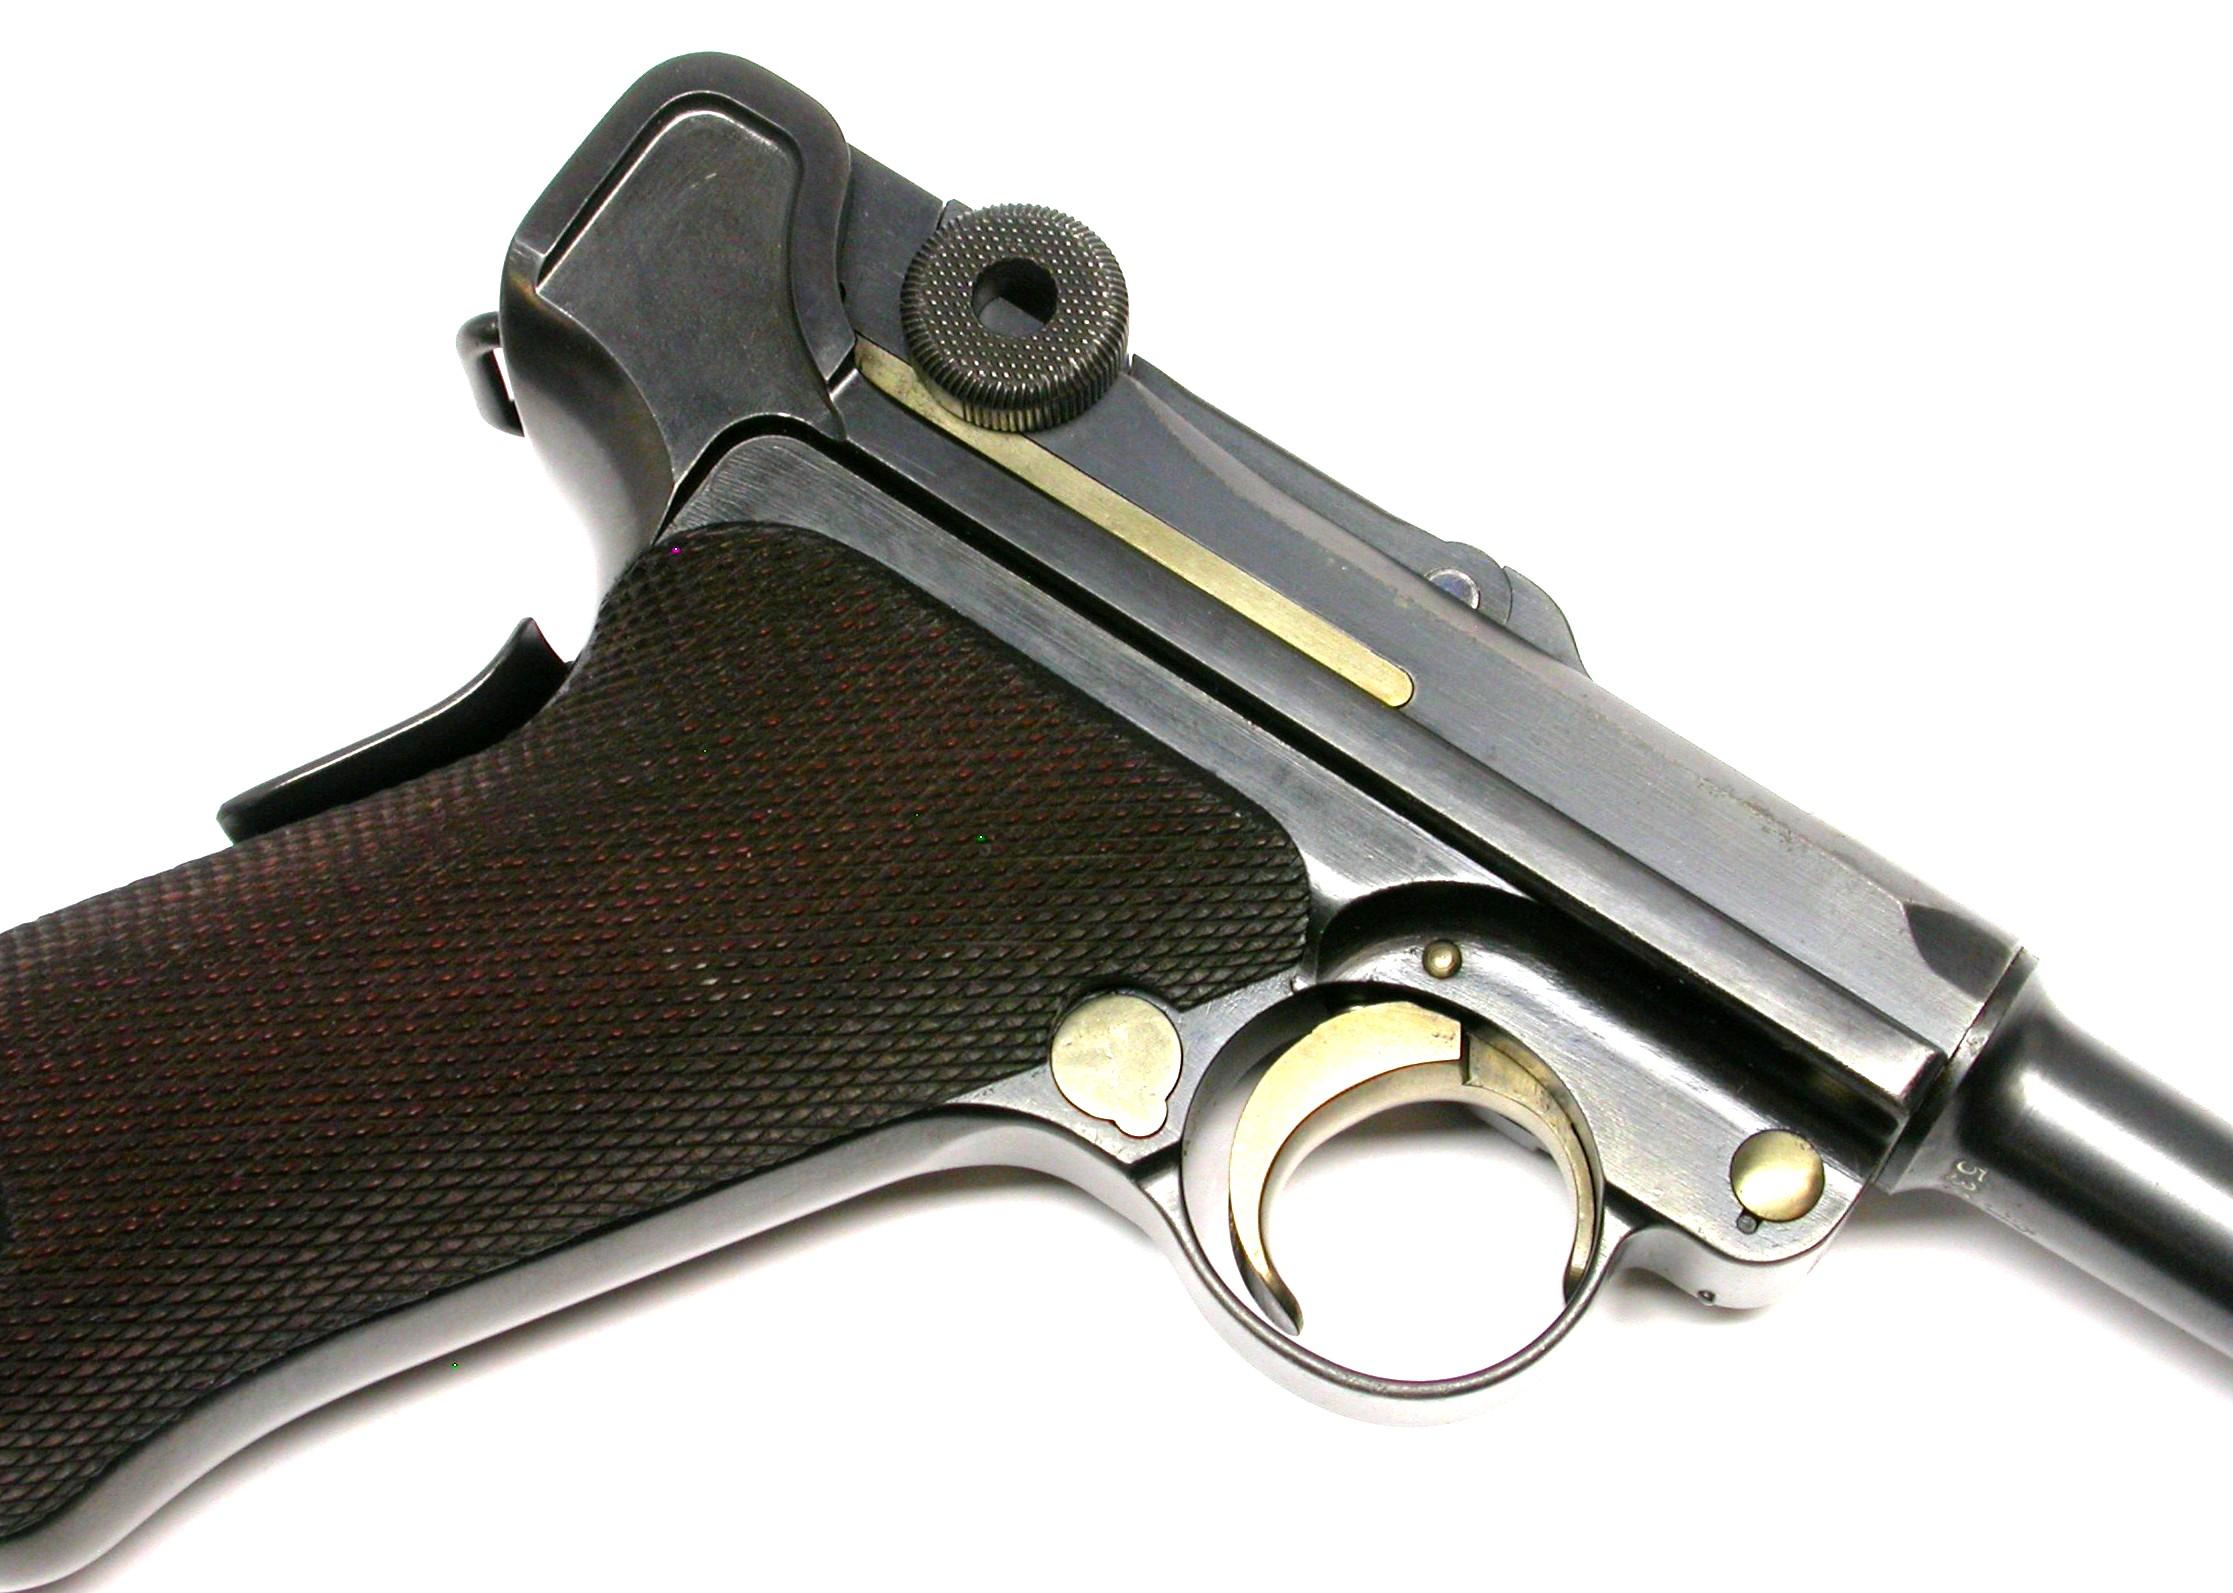 Classic German "American Eagle" Model 1906 9mm Luger Semi-Automatic Pistol - FFL #53361 (CAH)